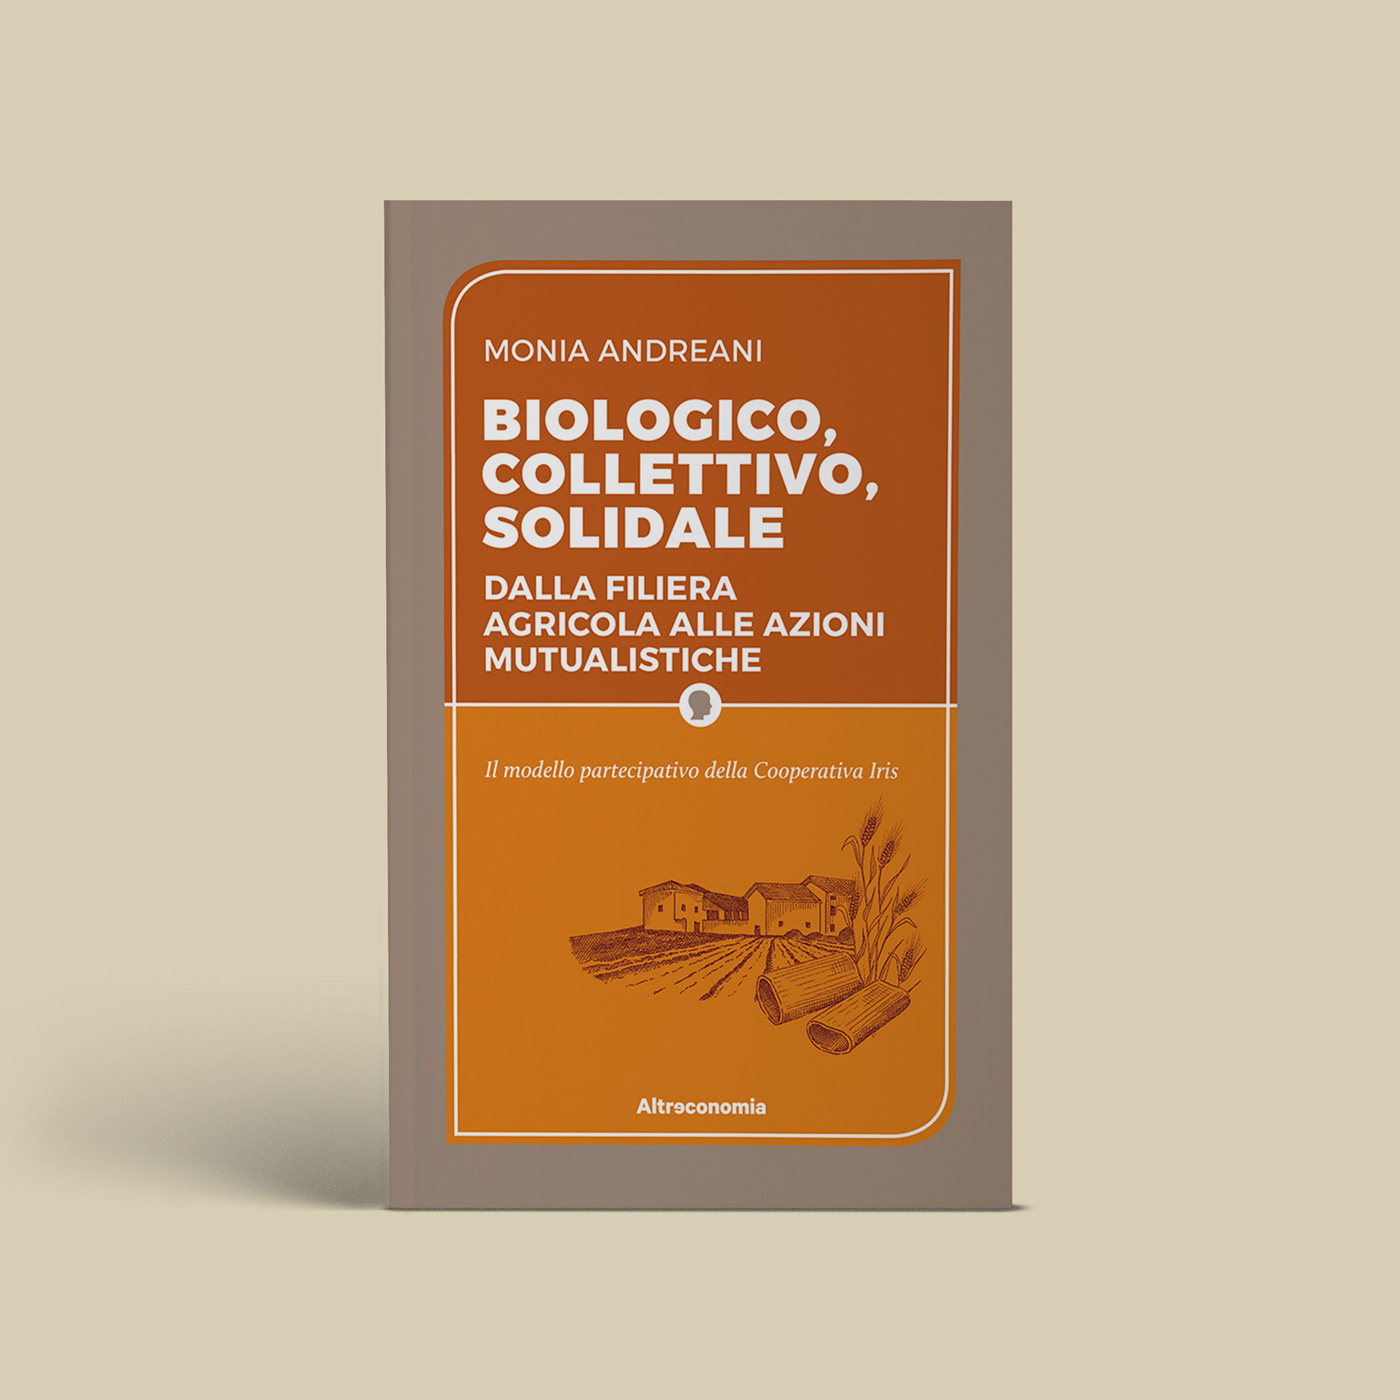 altreconomia book cover about cooperativism and green economy